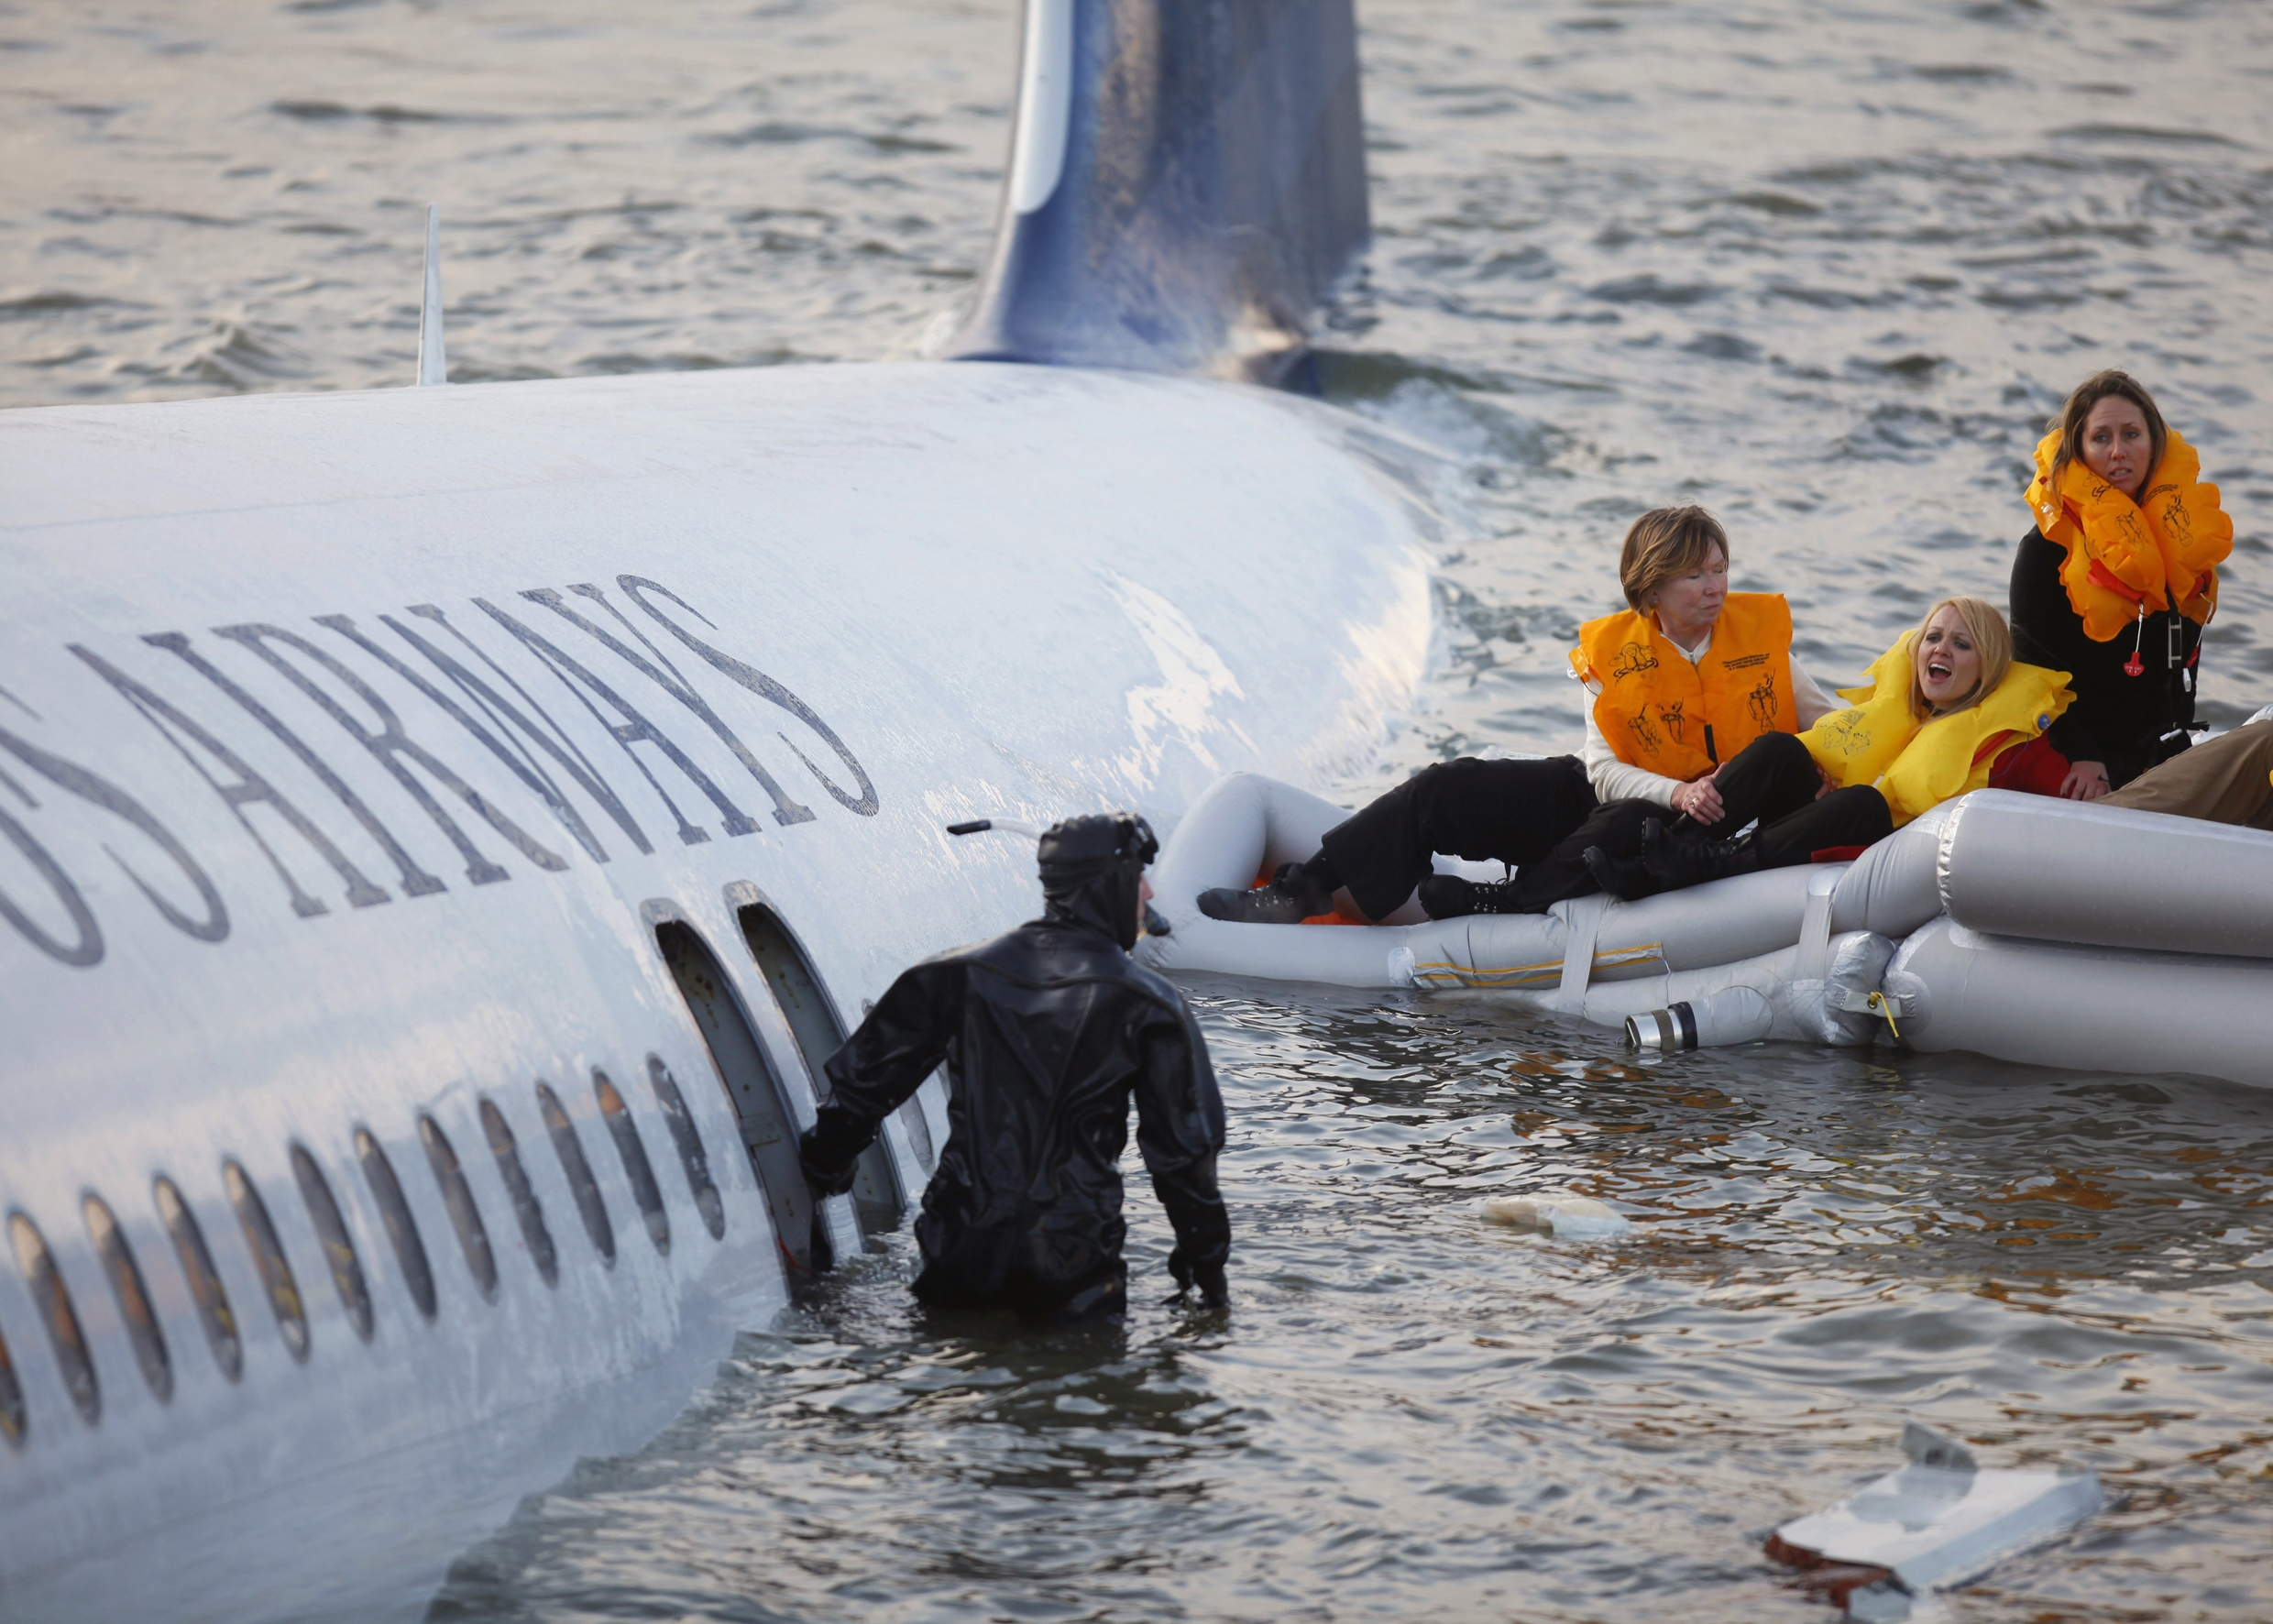 Самолет падает в воду. Аварийная посадка a320 на Гудзон. Гудзон 15 января 2009. Чудо на Гудзоне 2009. Посадка Airbus a320 на Гудзон.